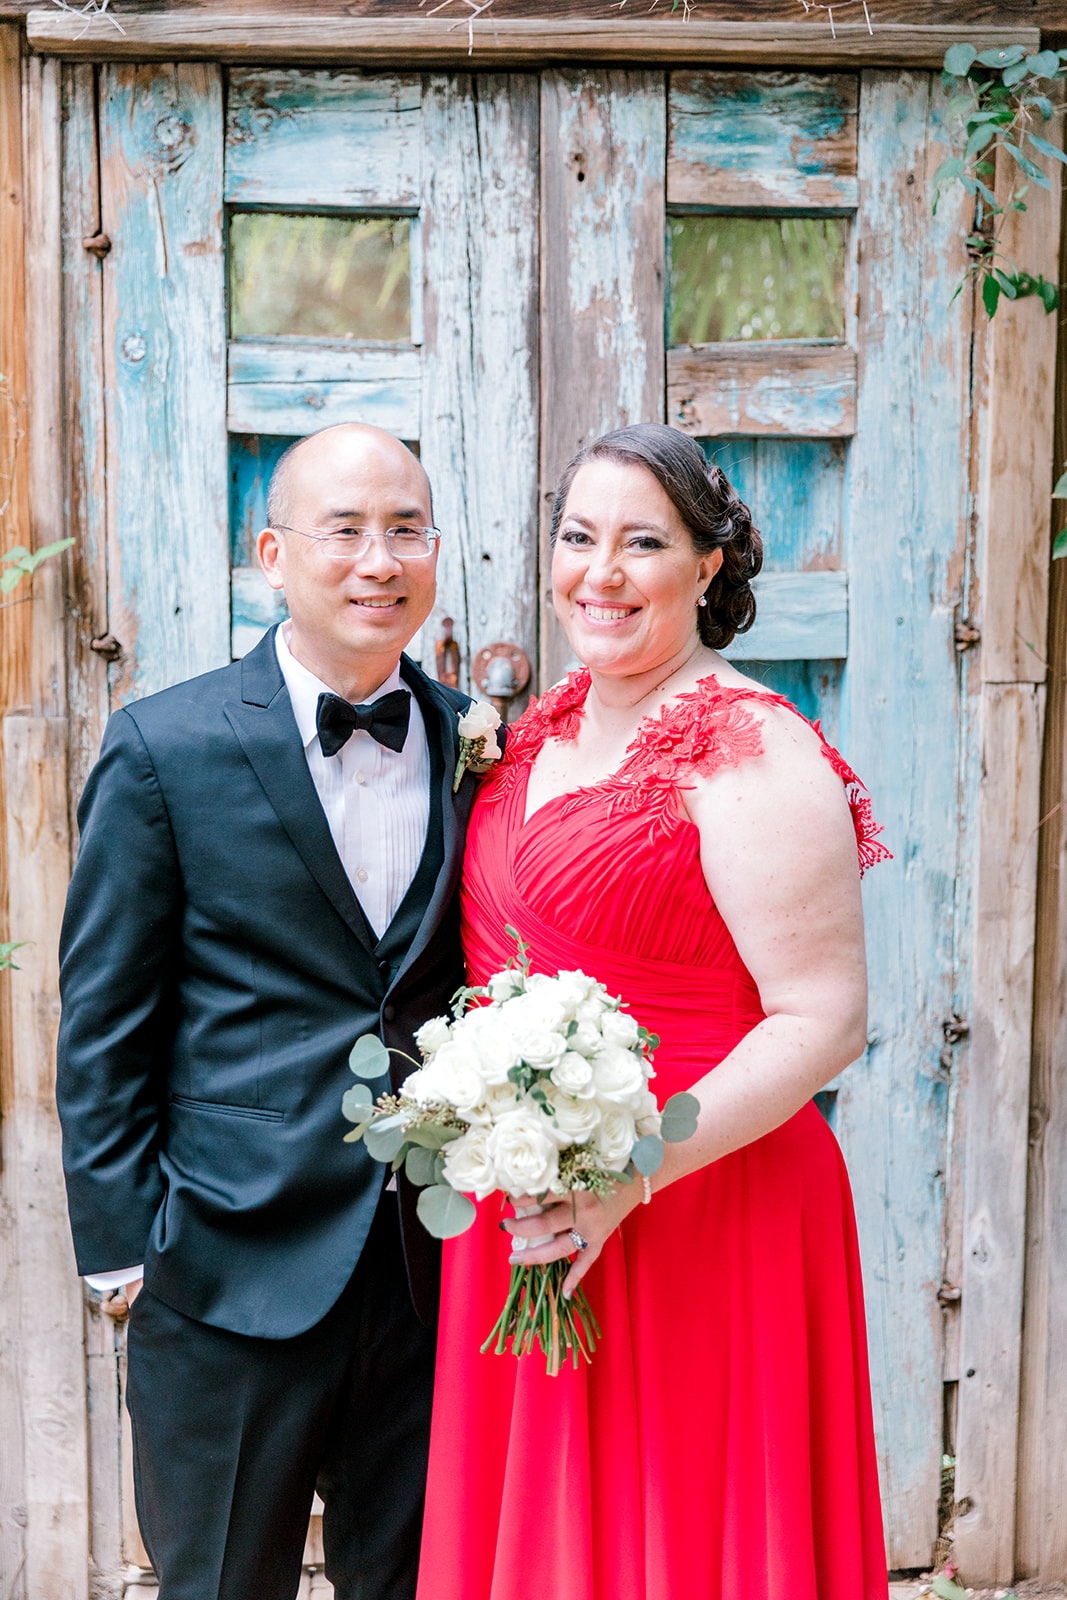 newlyweds wearing tux and custom red wedding dress